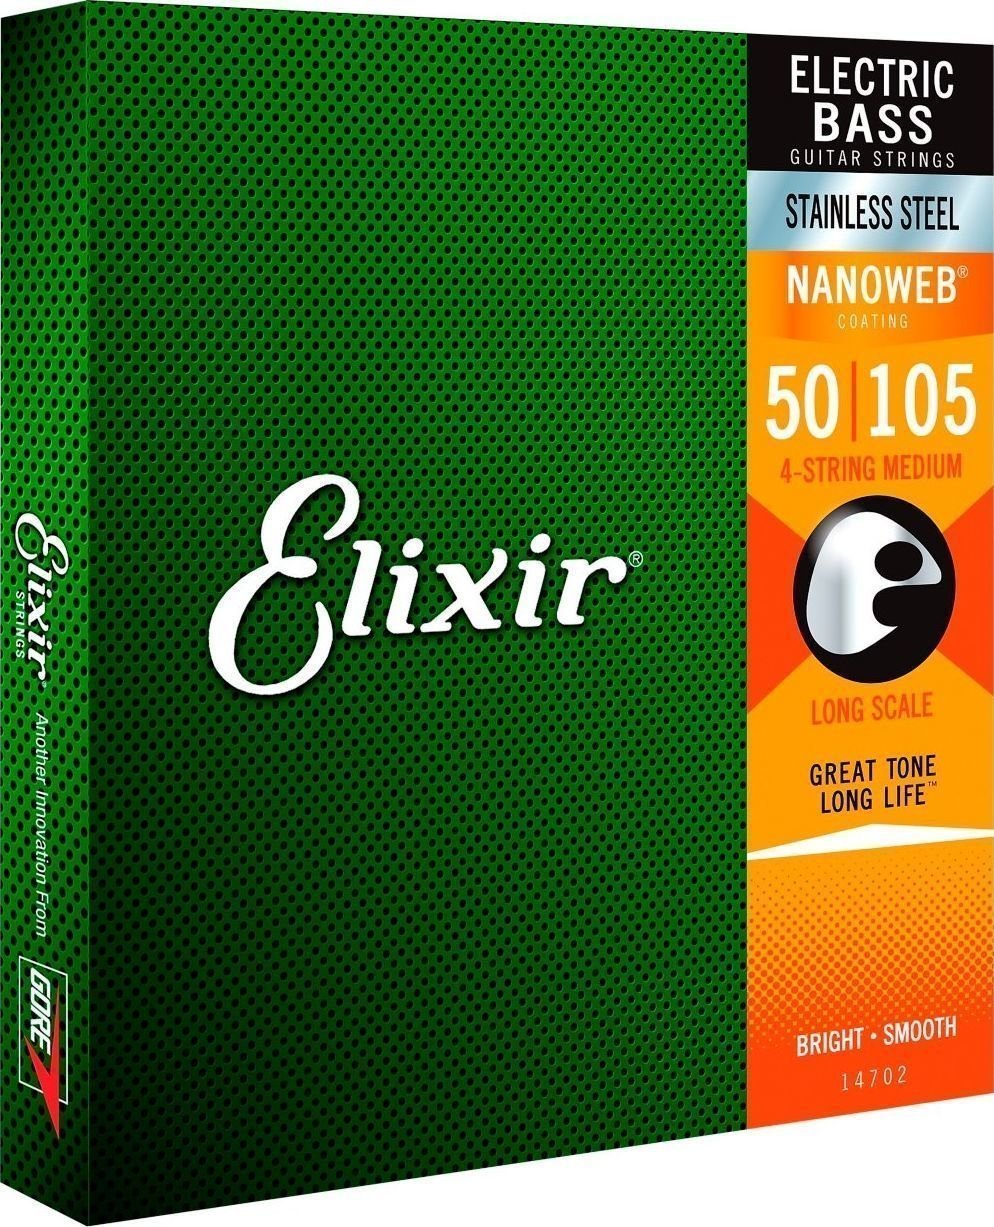 Bassguitar strings Elixir 14702 Nanoweb